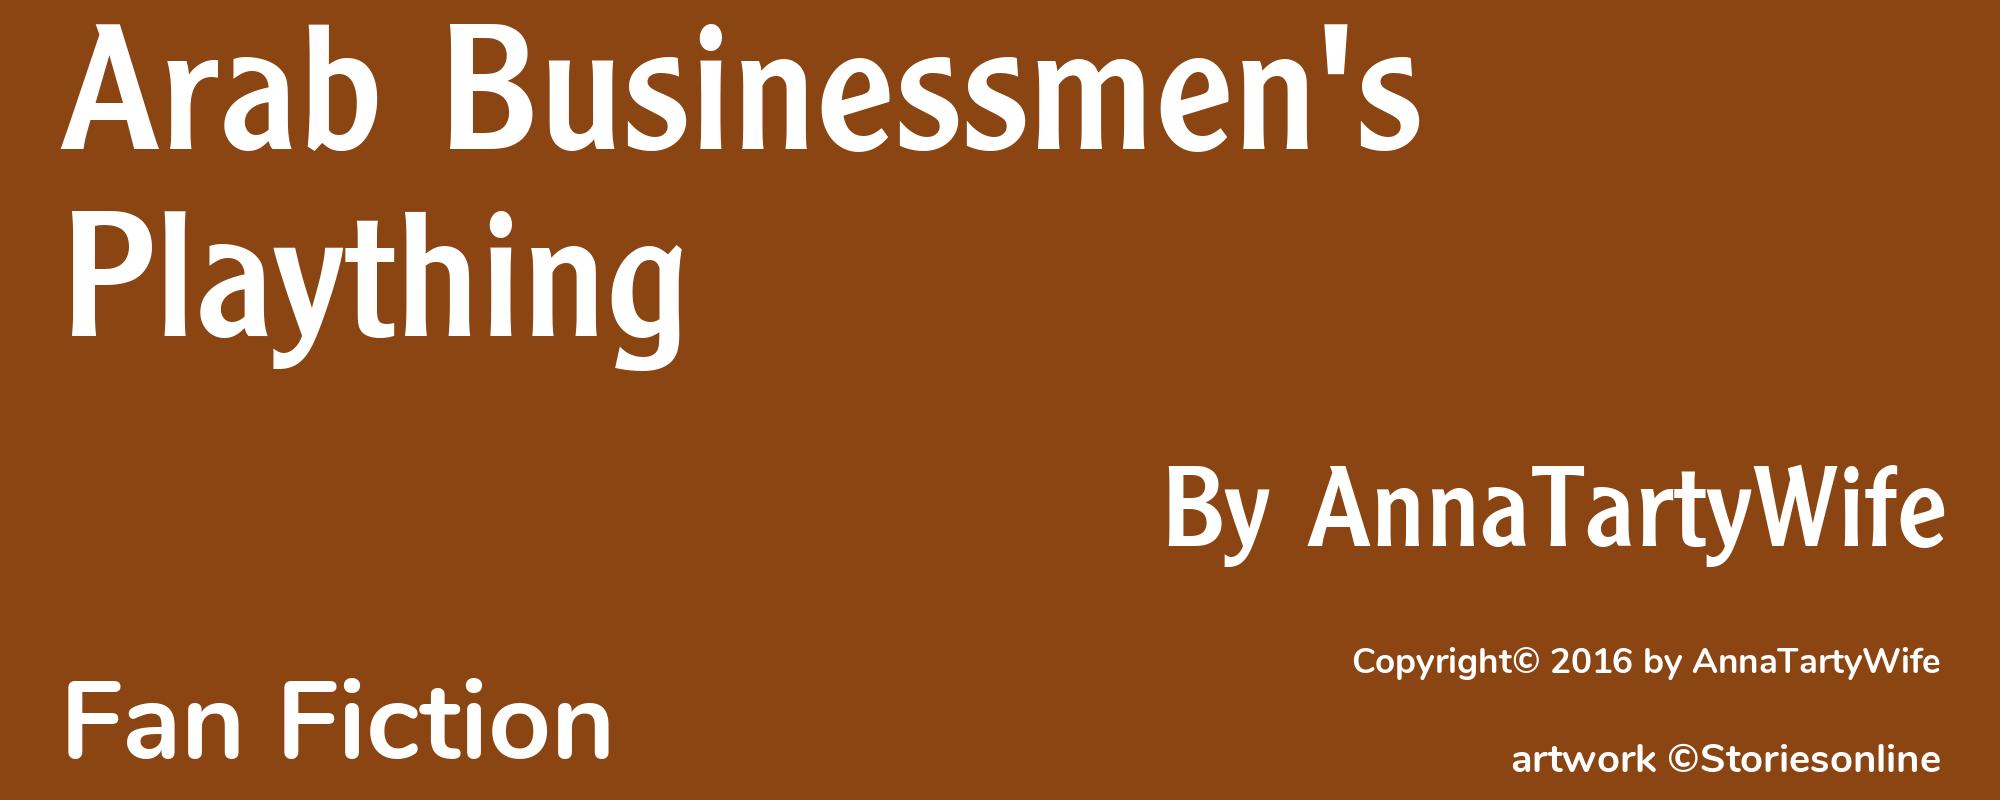 Arab Businessmen's Plaything - Cover